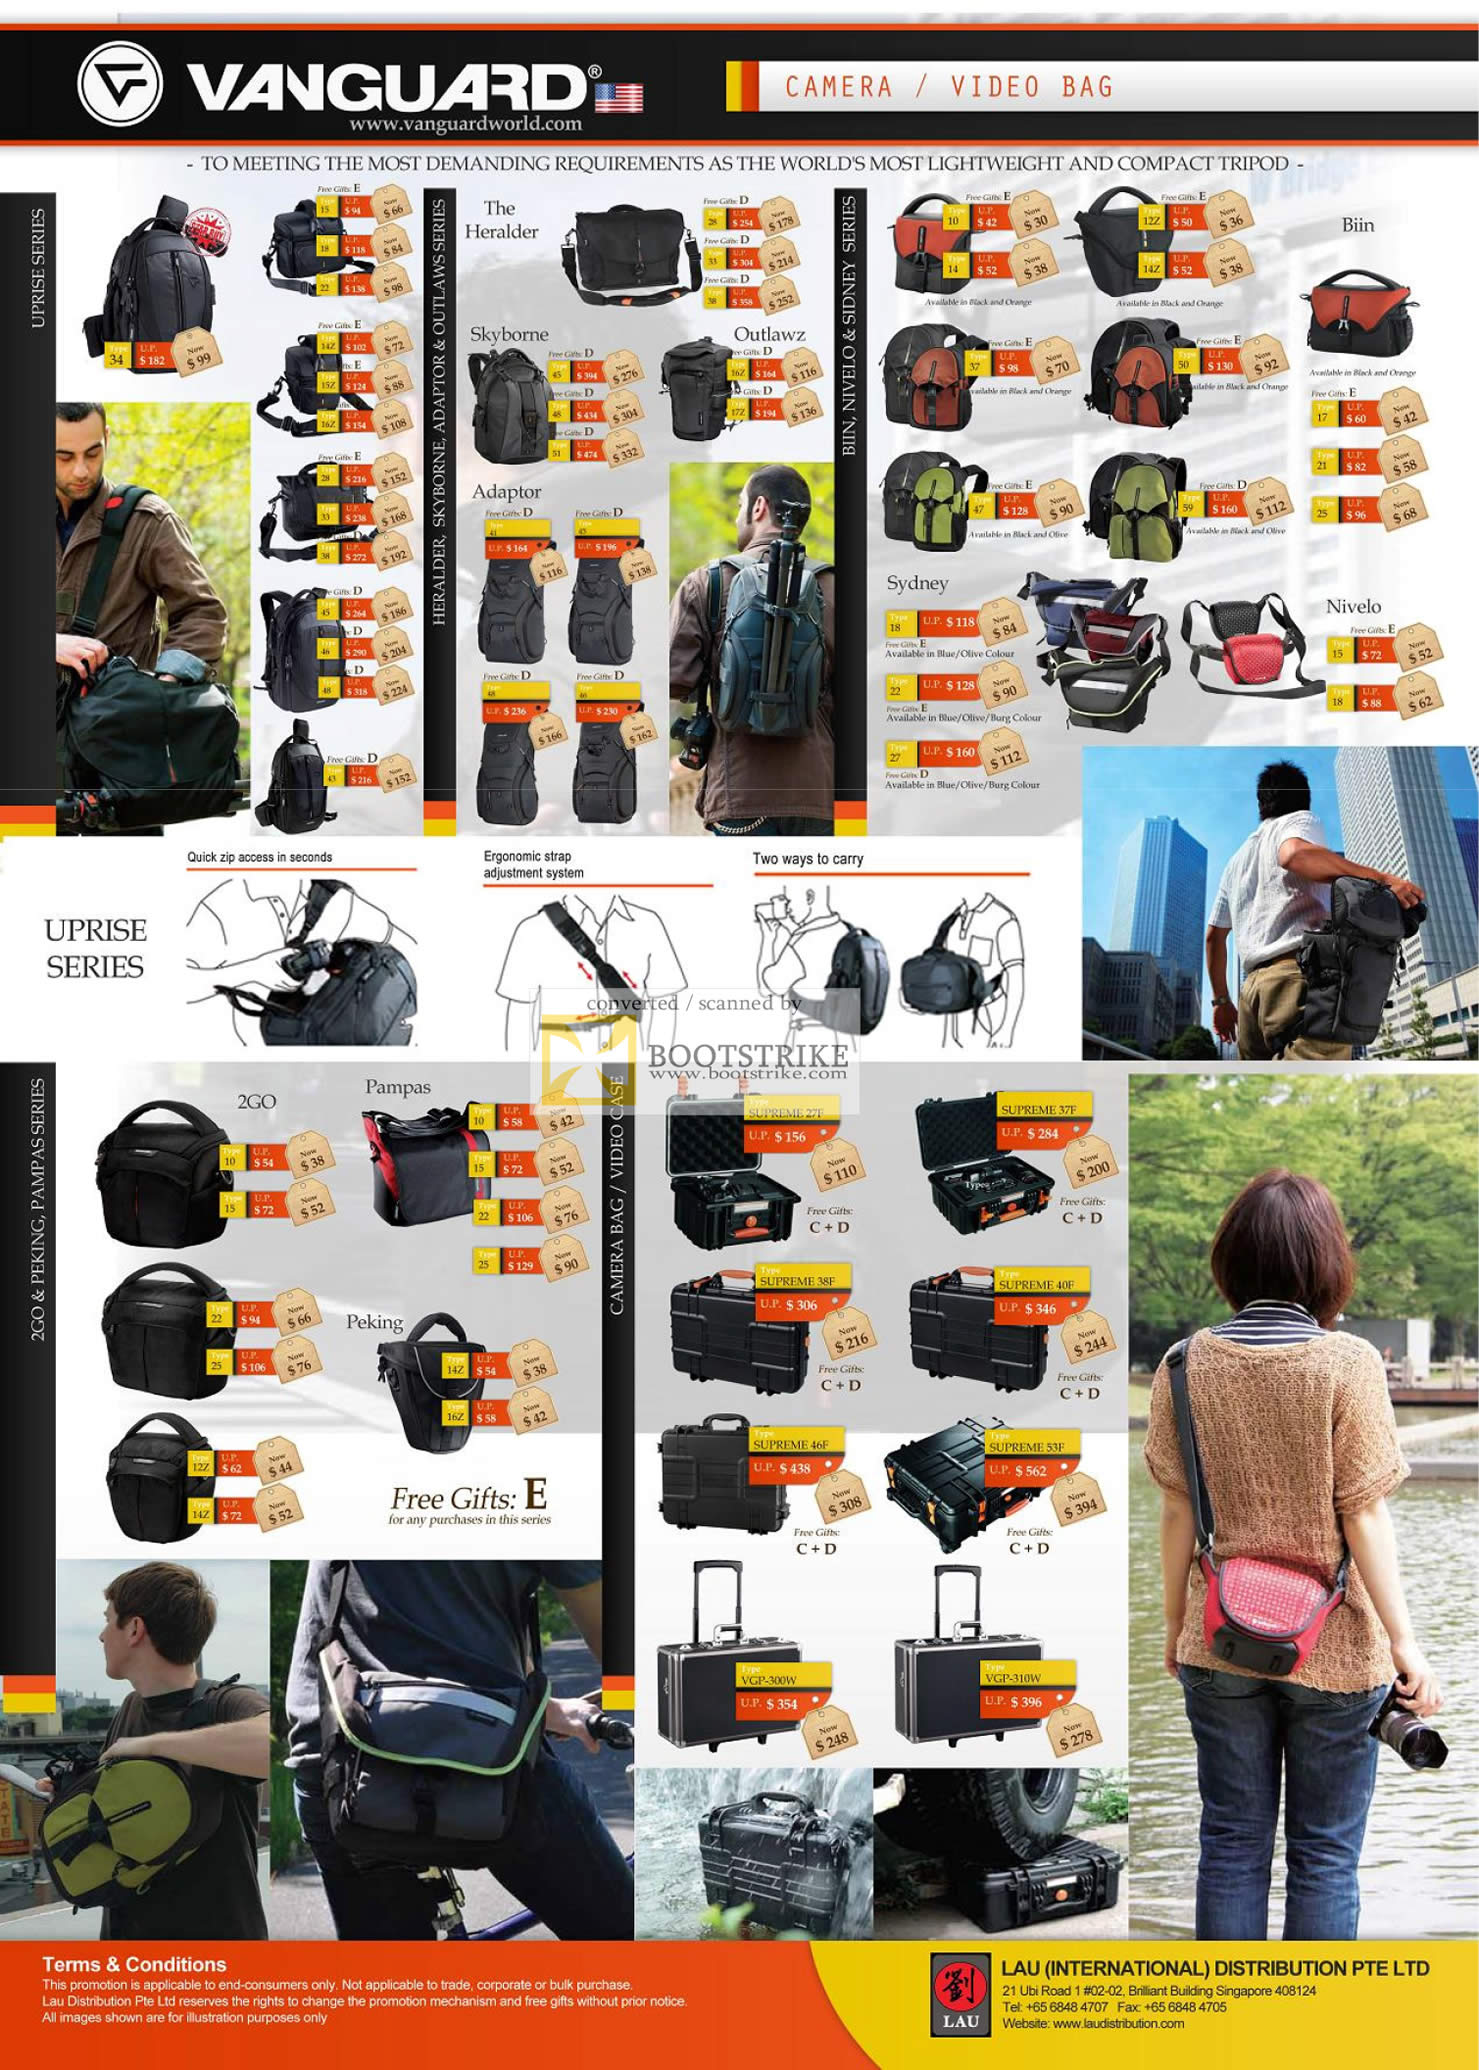 COMEX 2011 price list image brochure of Lau Intl Vanguard Camera Video Bags Heralder Skyborne Adaptor Sydney Uprise Pampas Peking